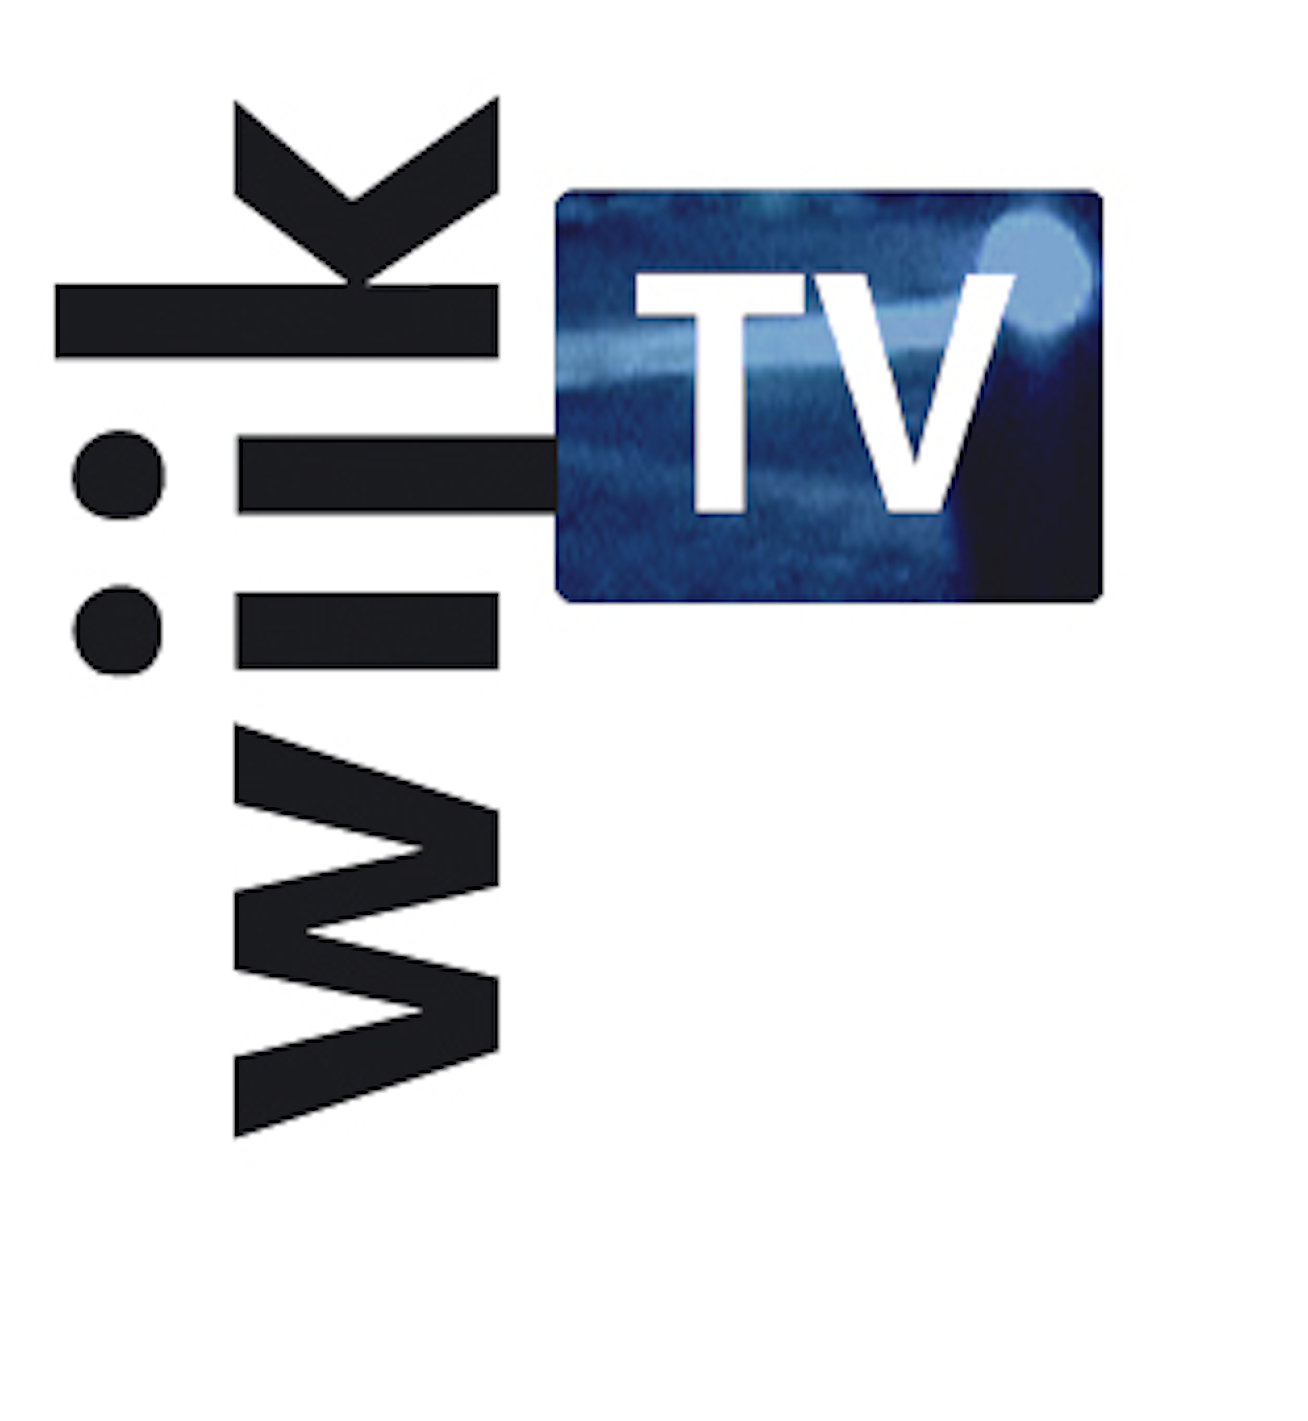 wijkTV-logo